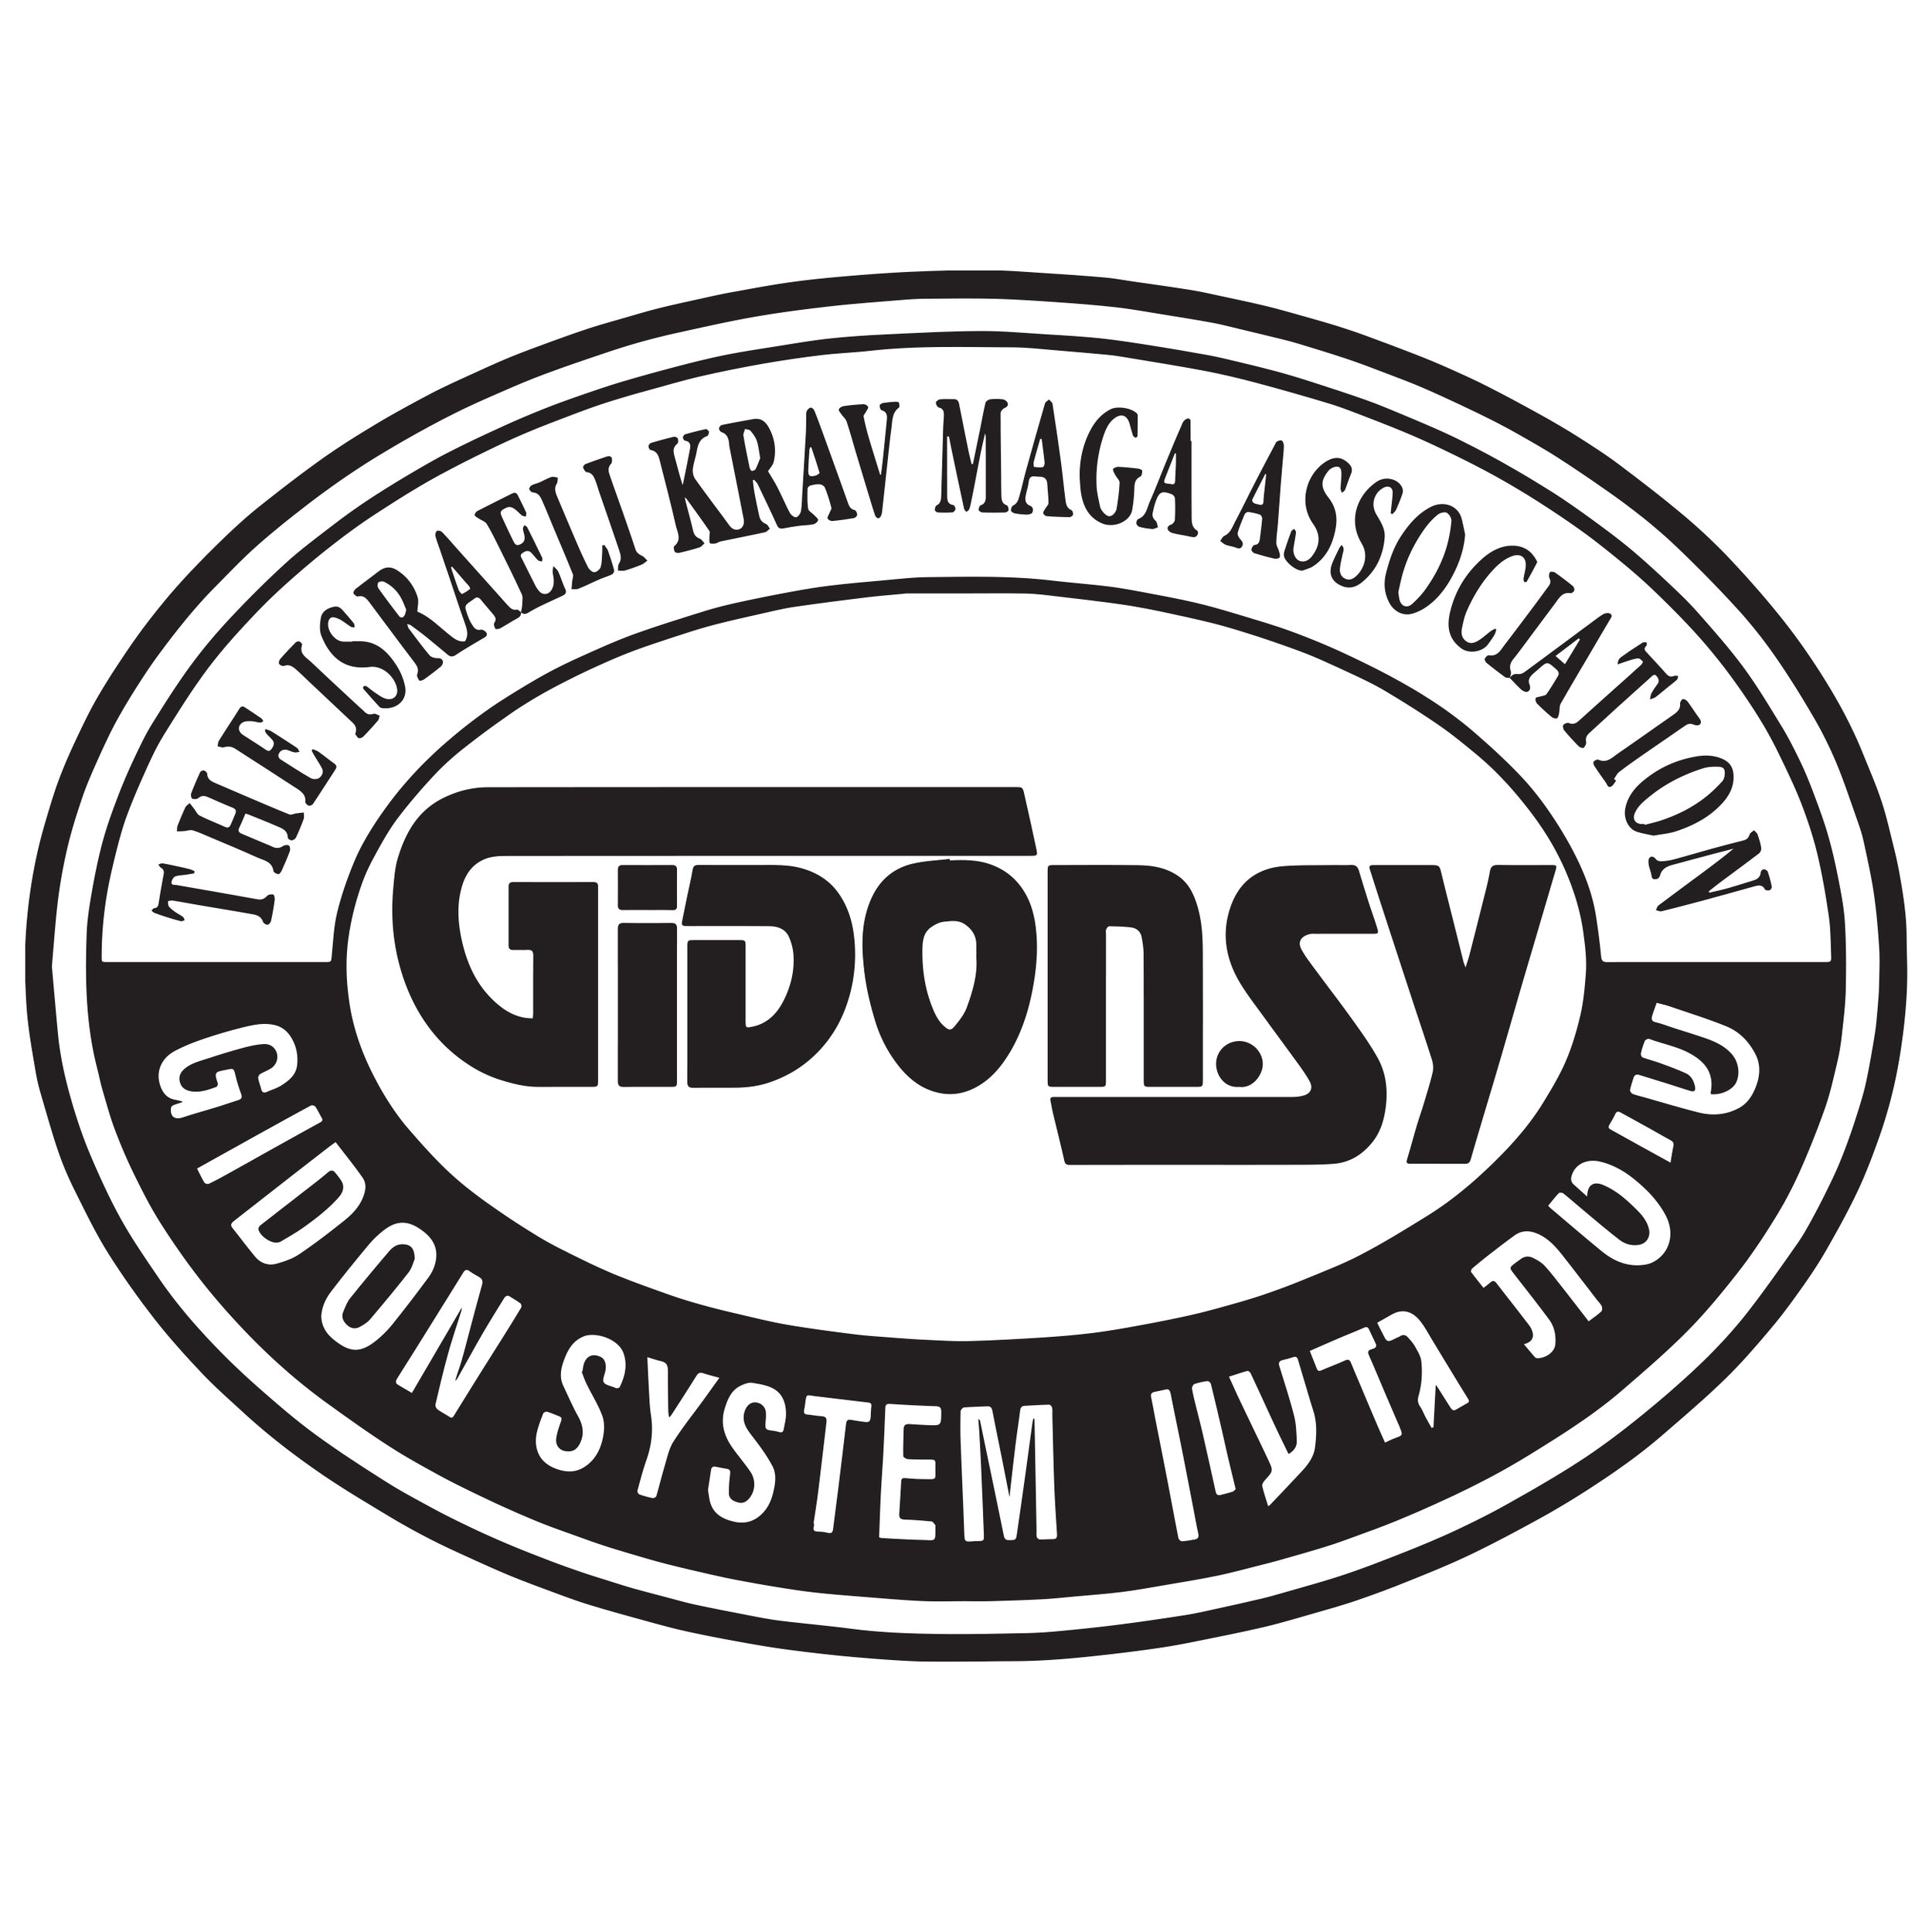 GIDON SYSTEM LOGO (Copy)